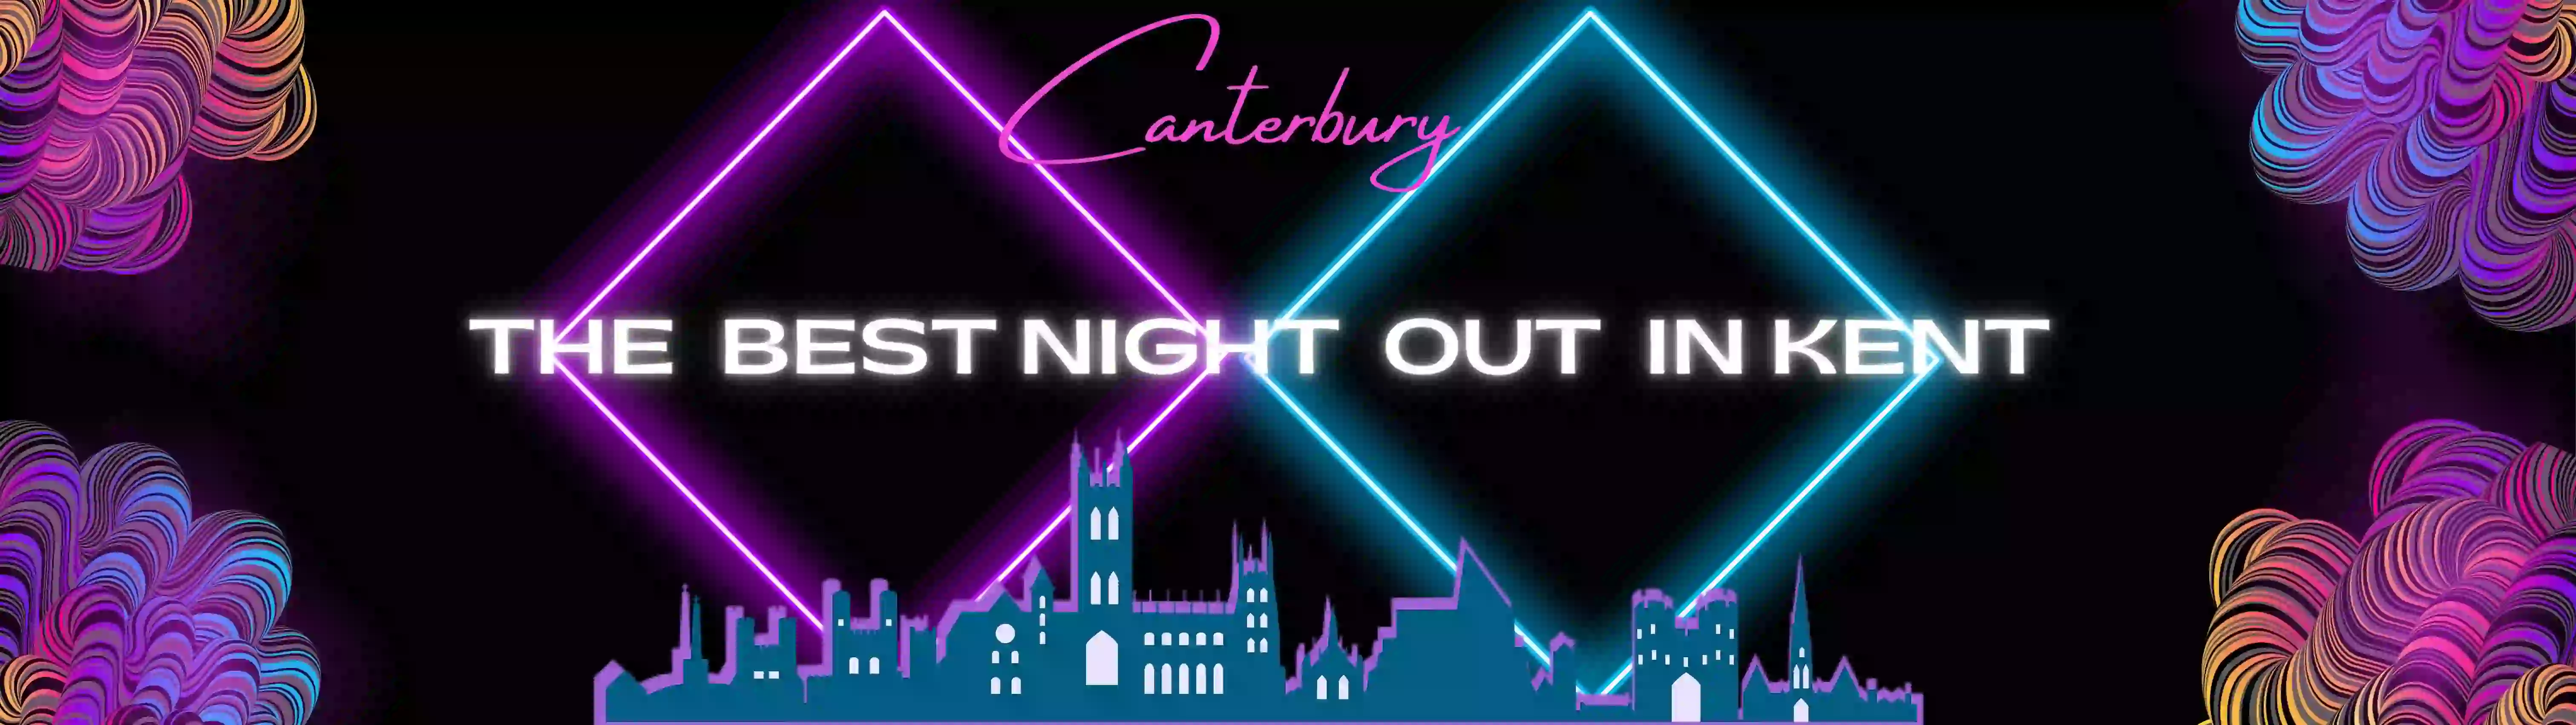 Canterbury Nightlife Sponsored Post (1600 X 450 Mm)